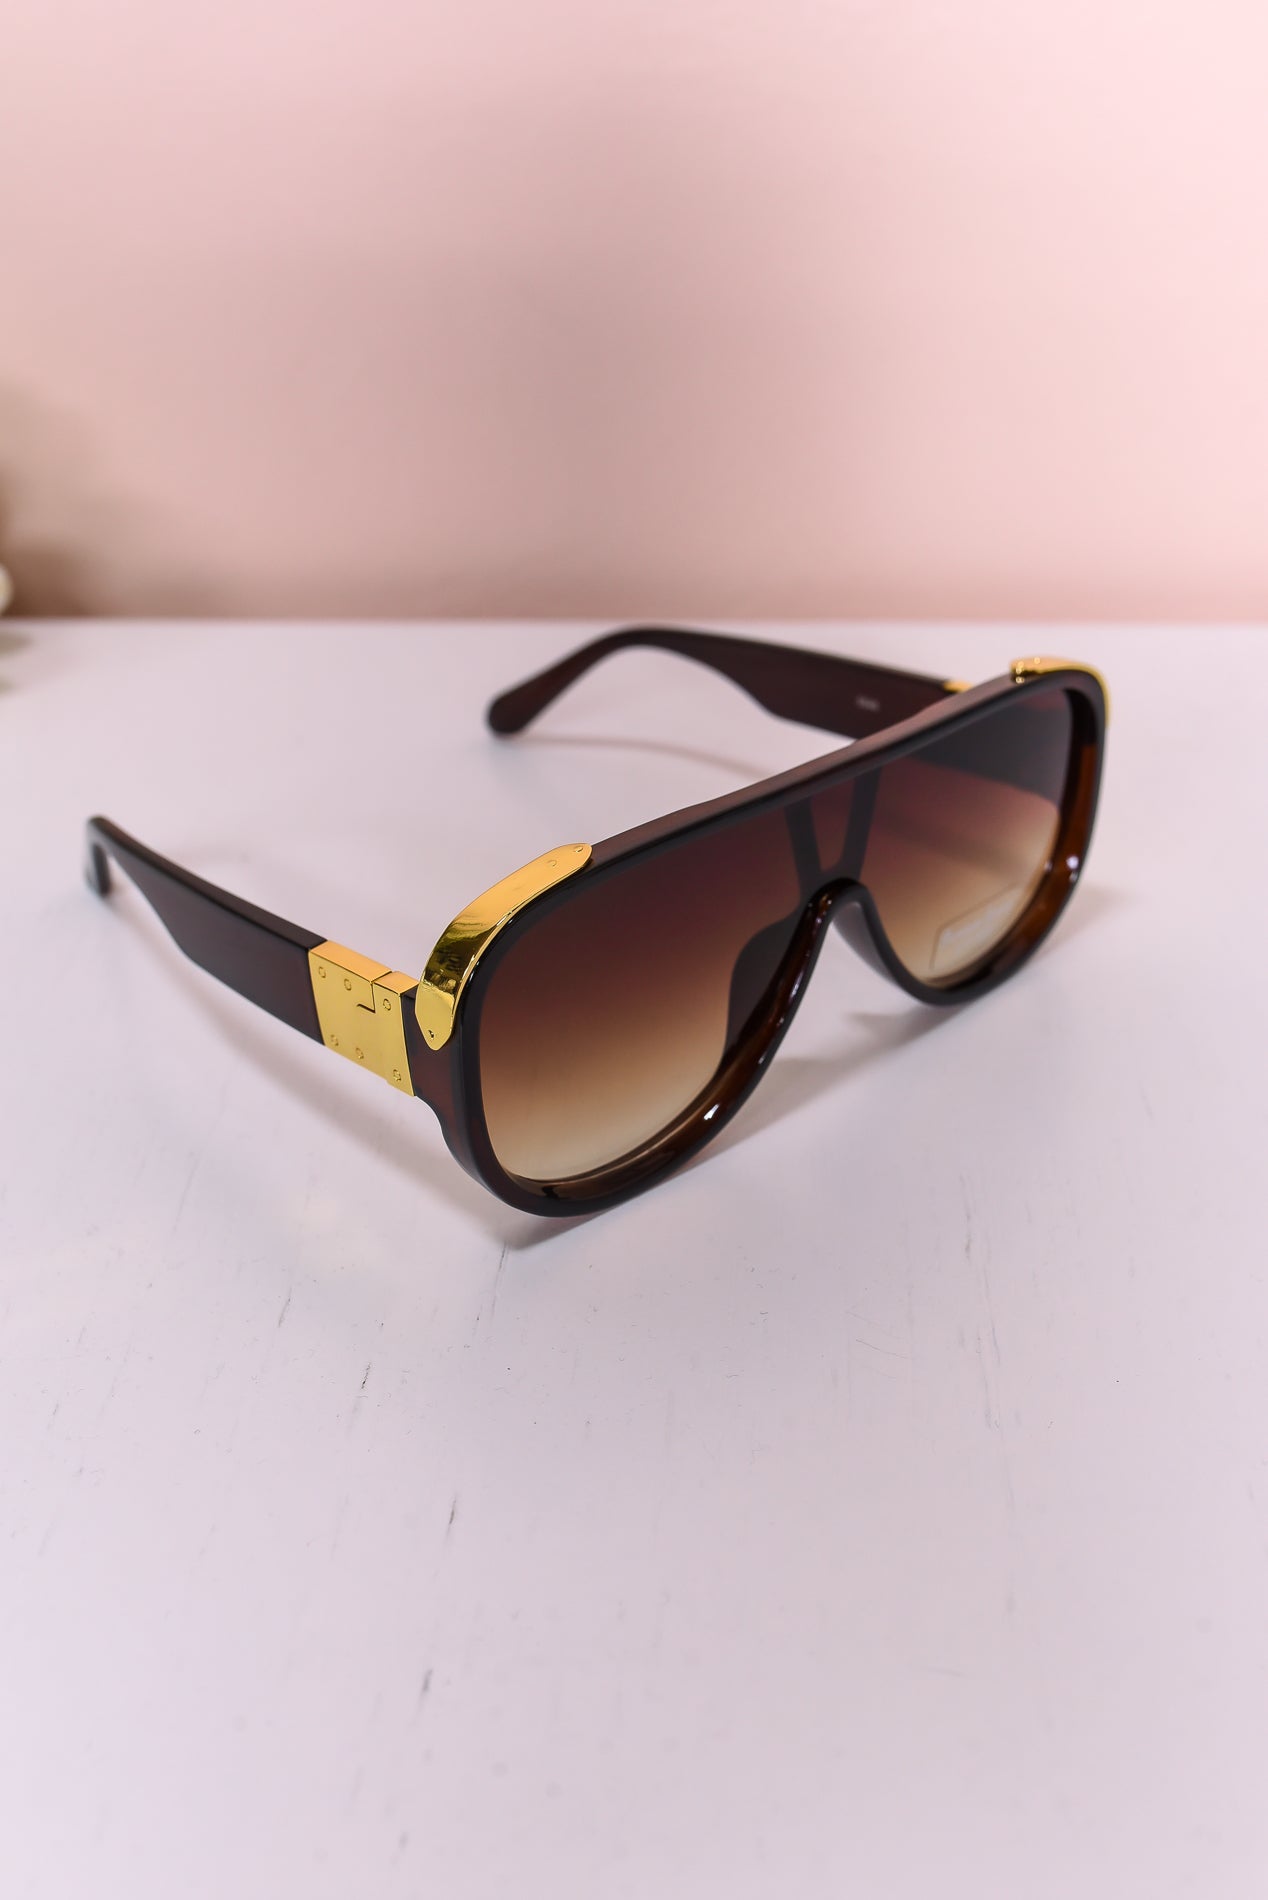 Multi Color/Gold Bold Aviators Sunglasses - SGL304 - FREE hard case